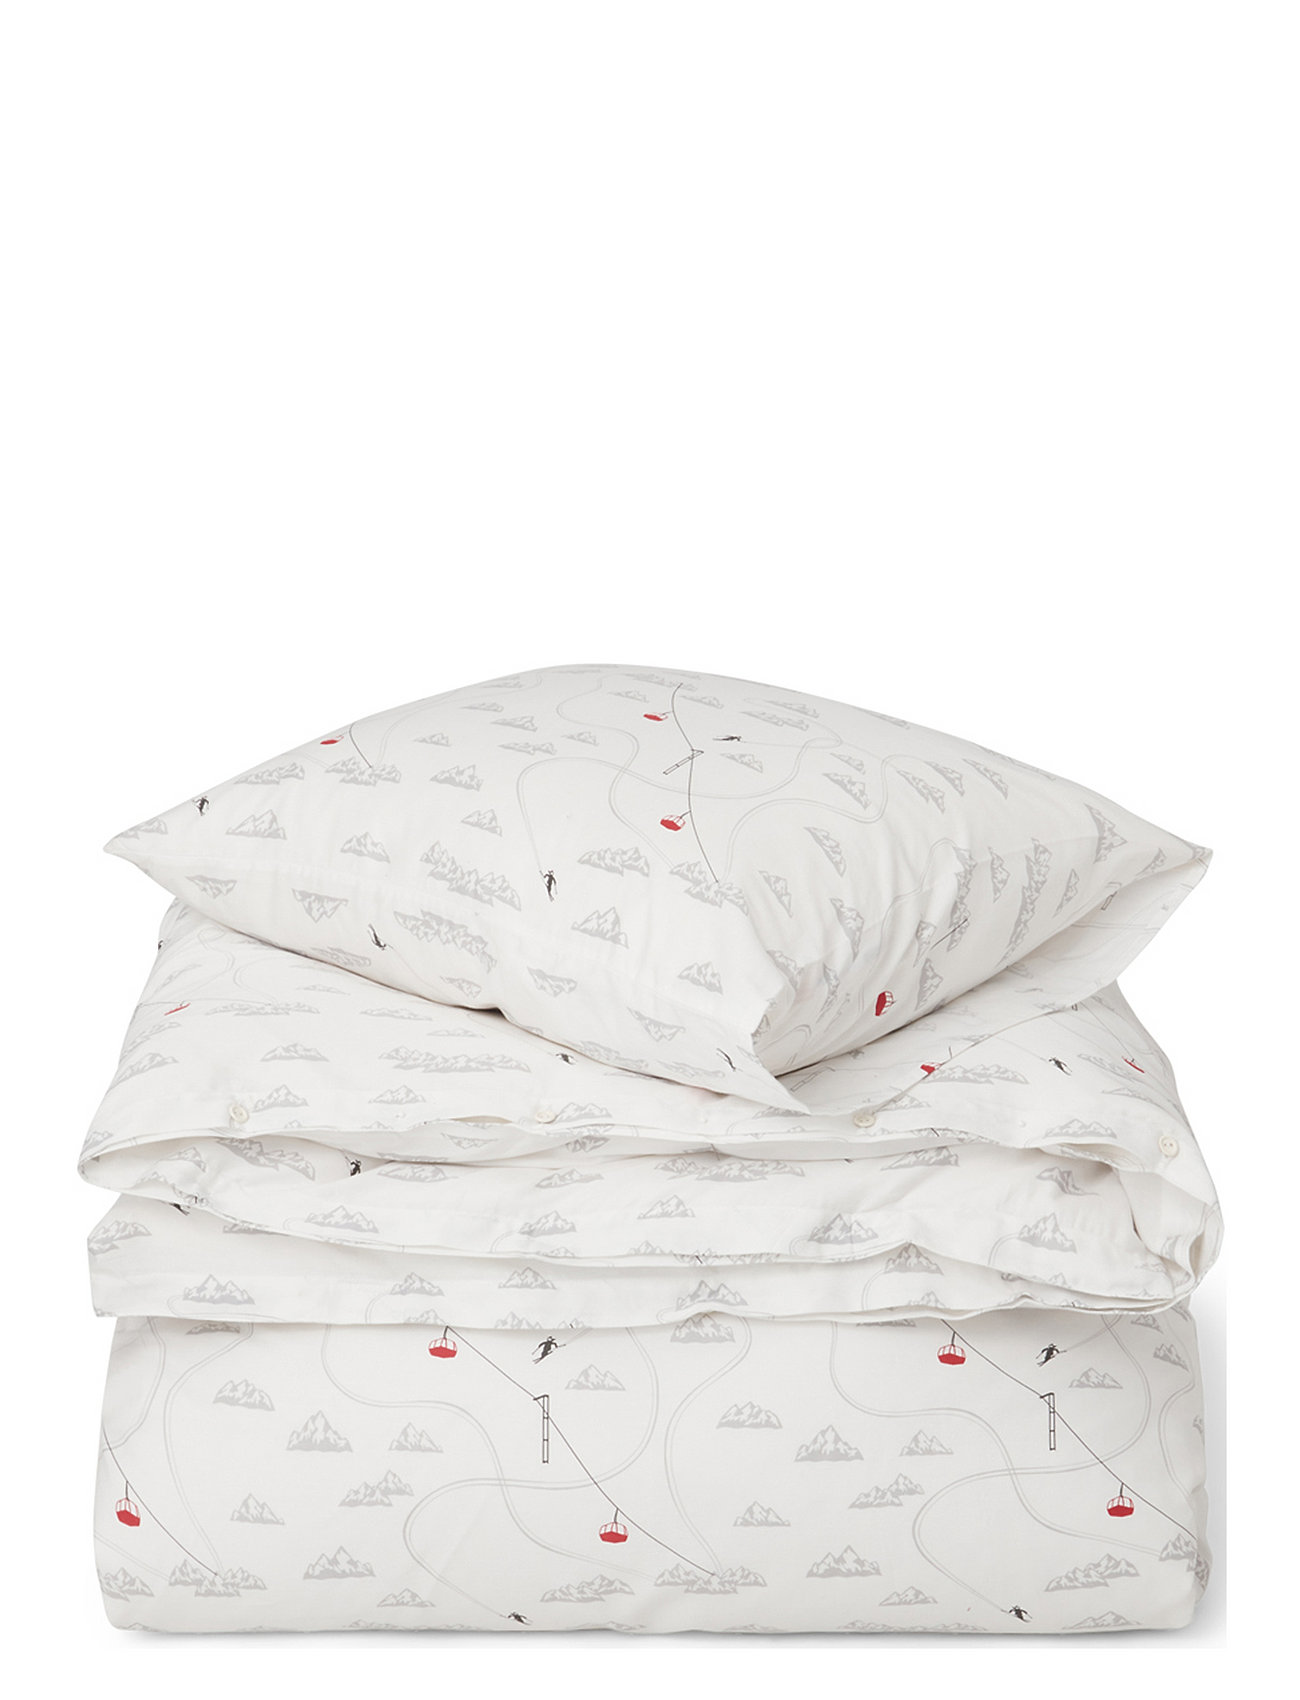 Winter Printed Cotton Sateen Bed Set Home Textiles Bedtextiles Bed Sets White Lexington Home